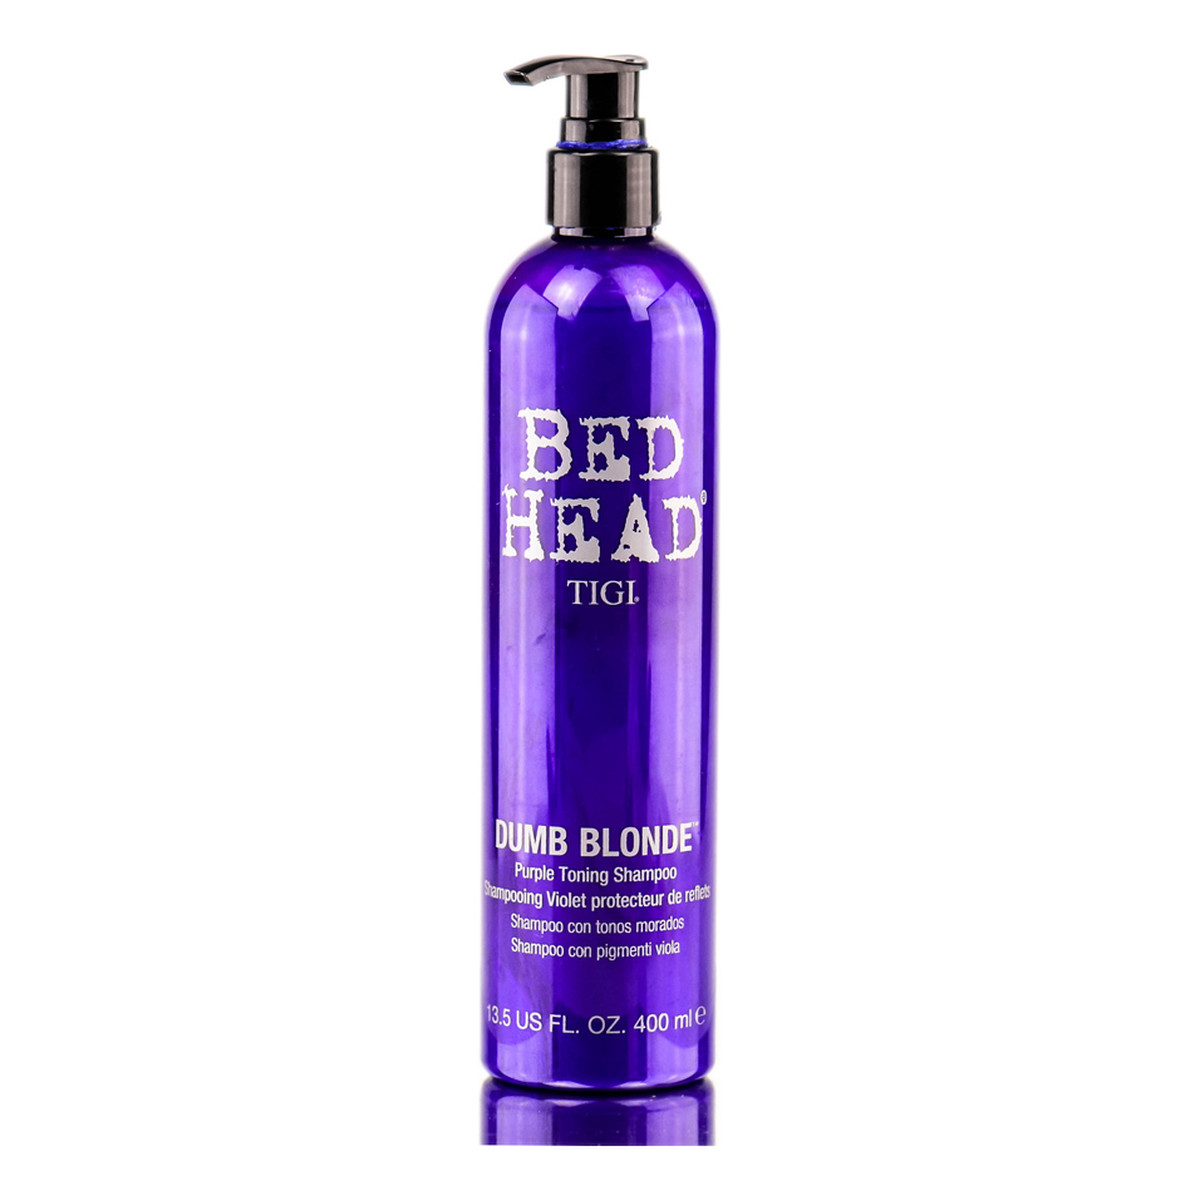 Tigi Bed head dumb blonde violet toning shampoo szampon do włosów blond 400ml